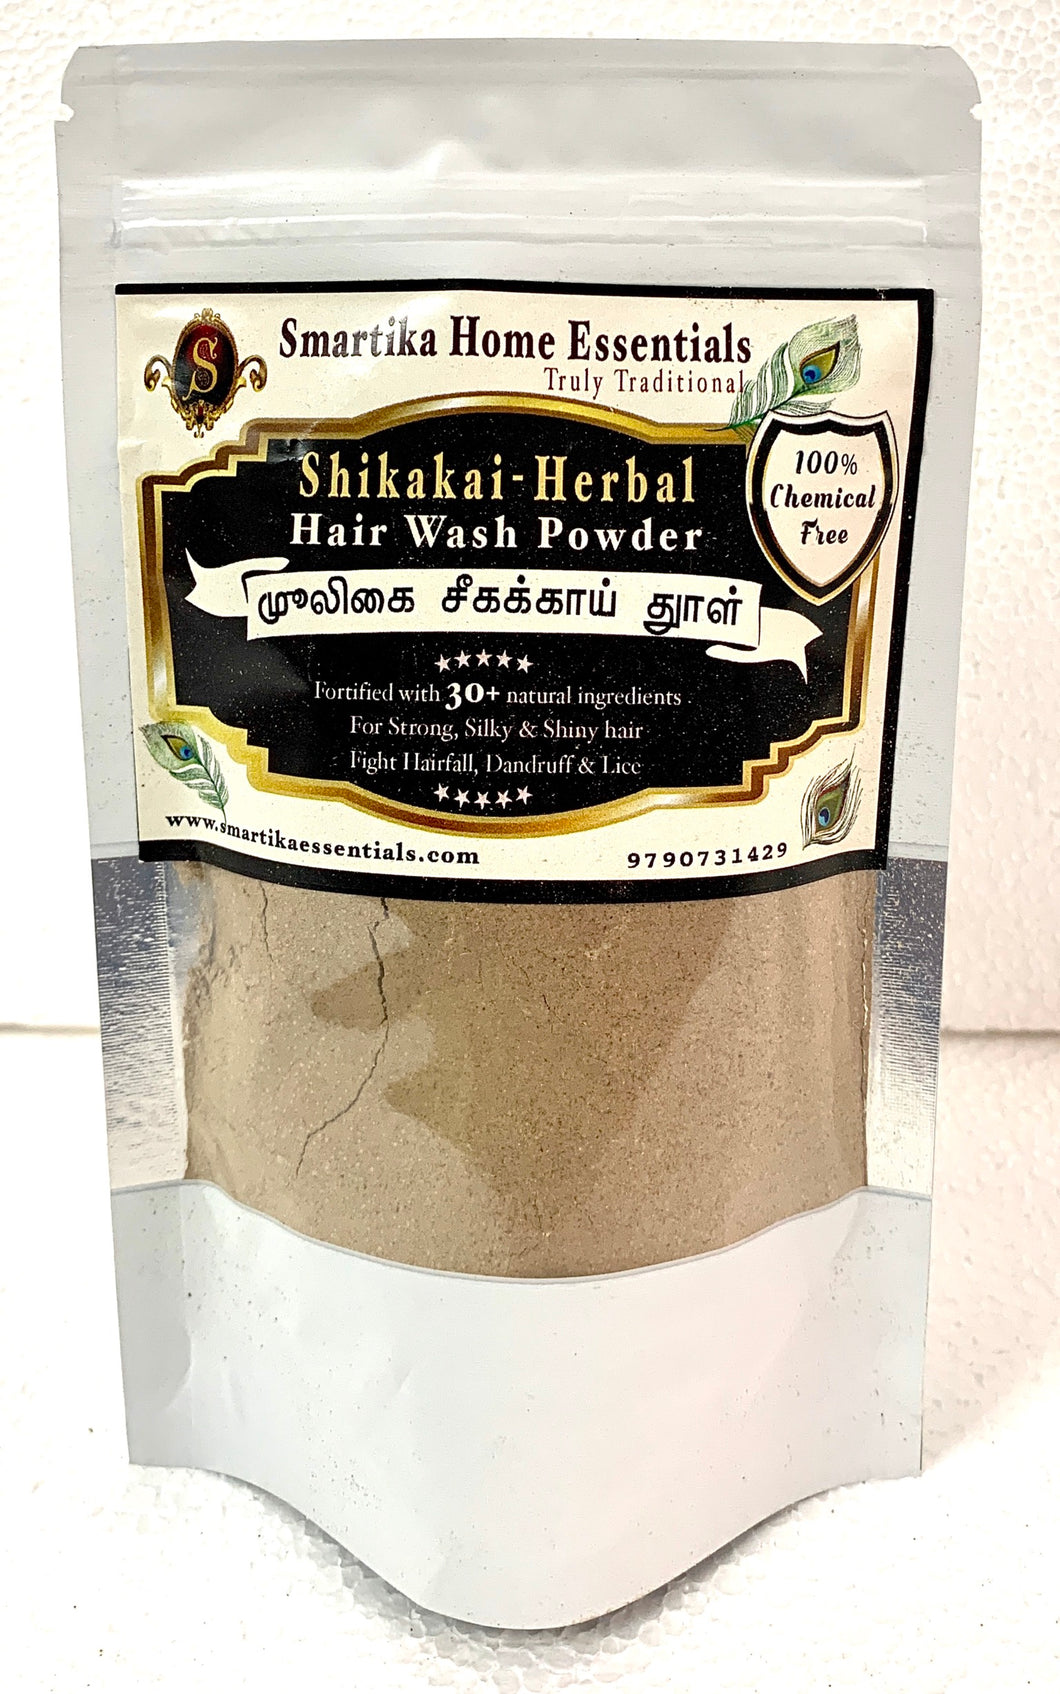 Shikakai-Herbal Hair Wash Powder - HOMEMADE